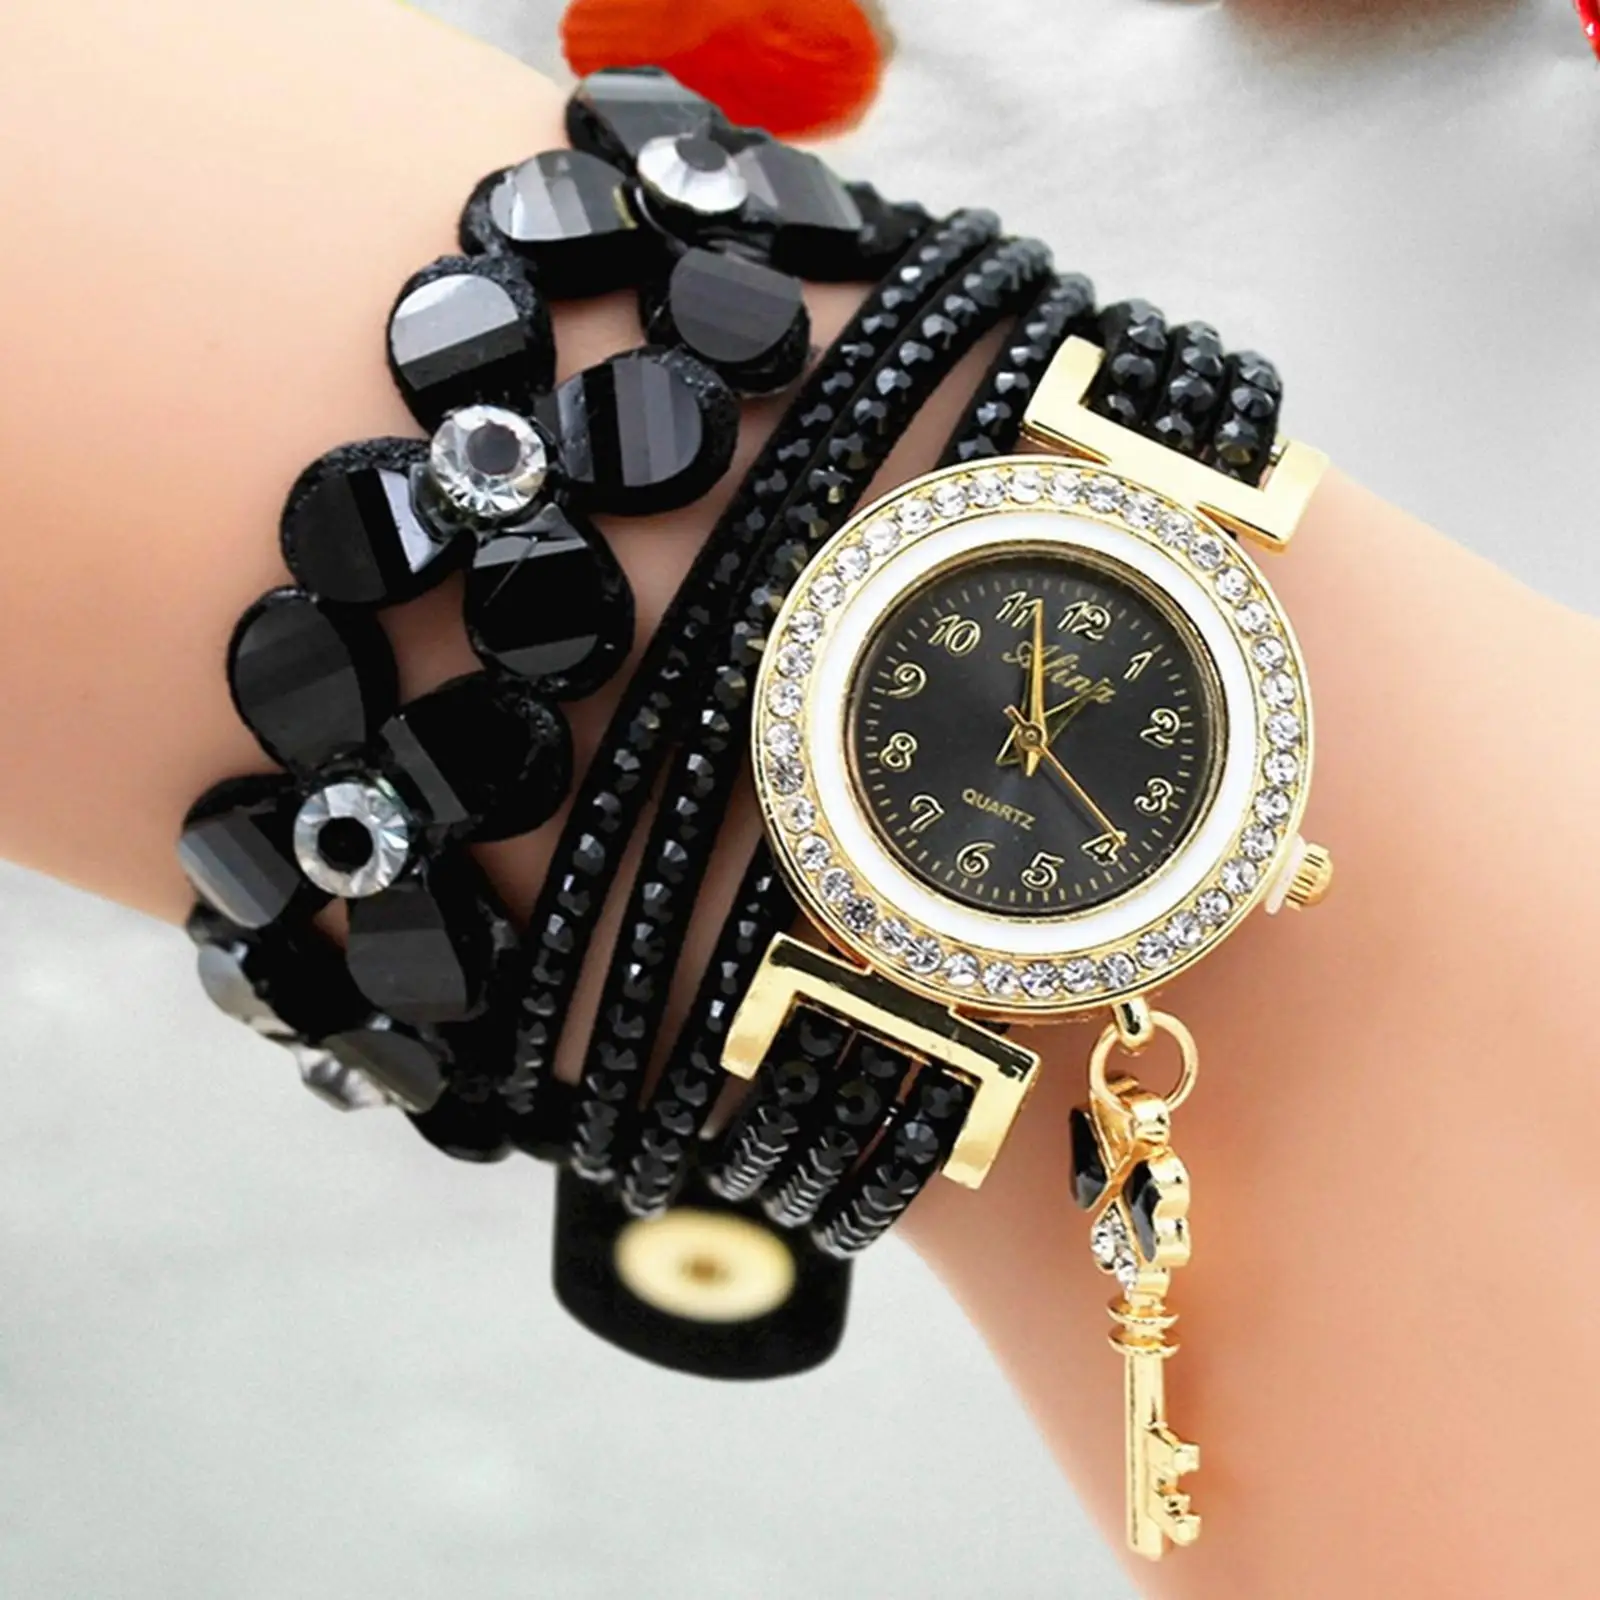 Bracelet Watch Strap Watch Fashion Women Lightweight Portable Pointer Wristwatch for Travel Shopping Hiking Street Backpacking